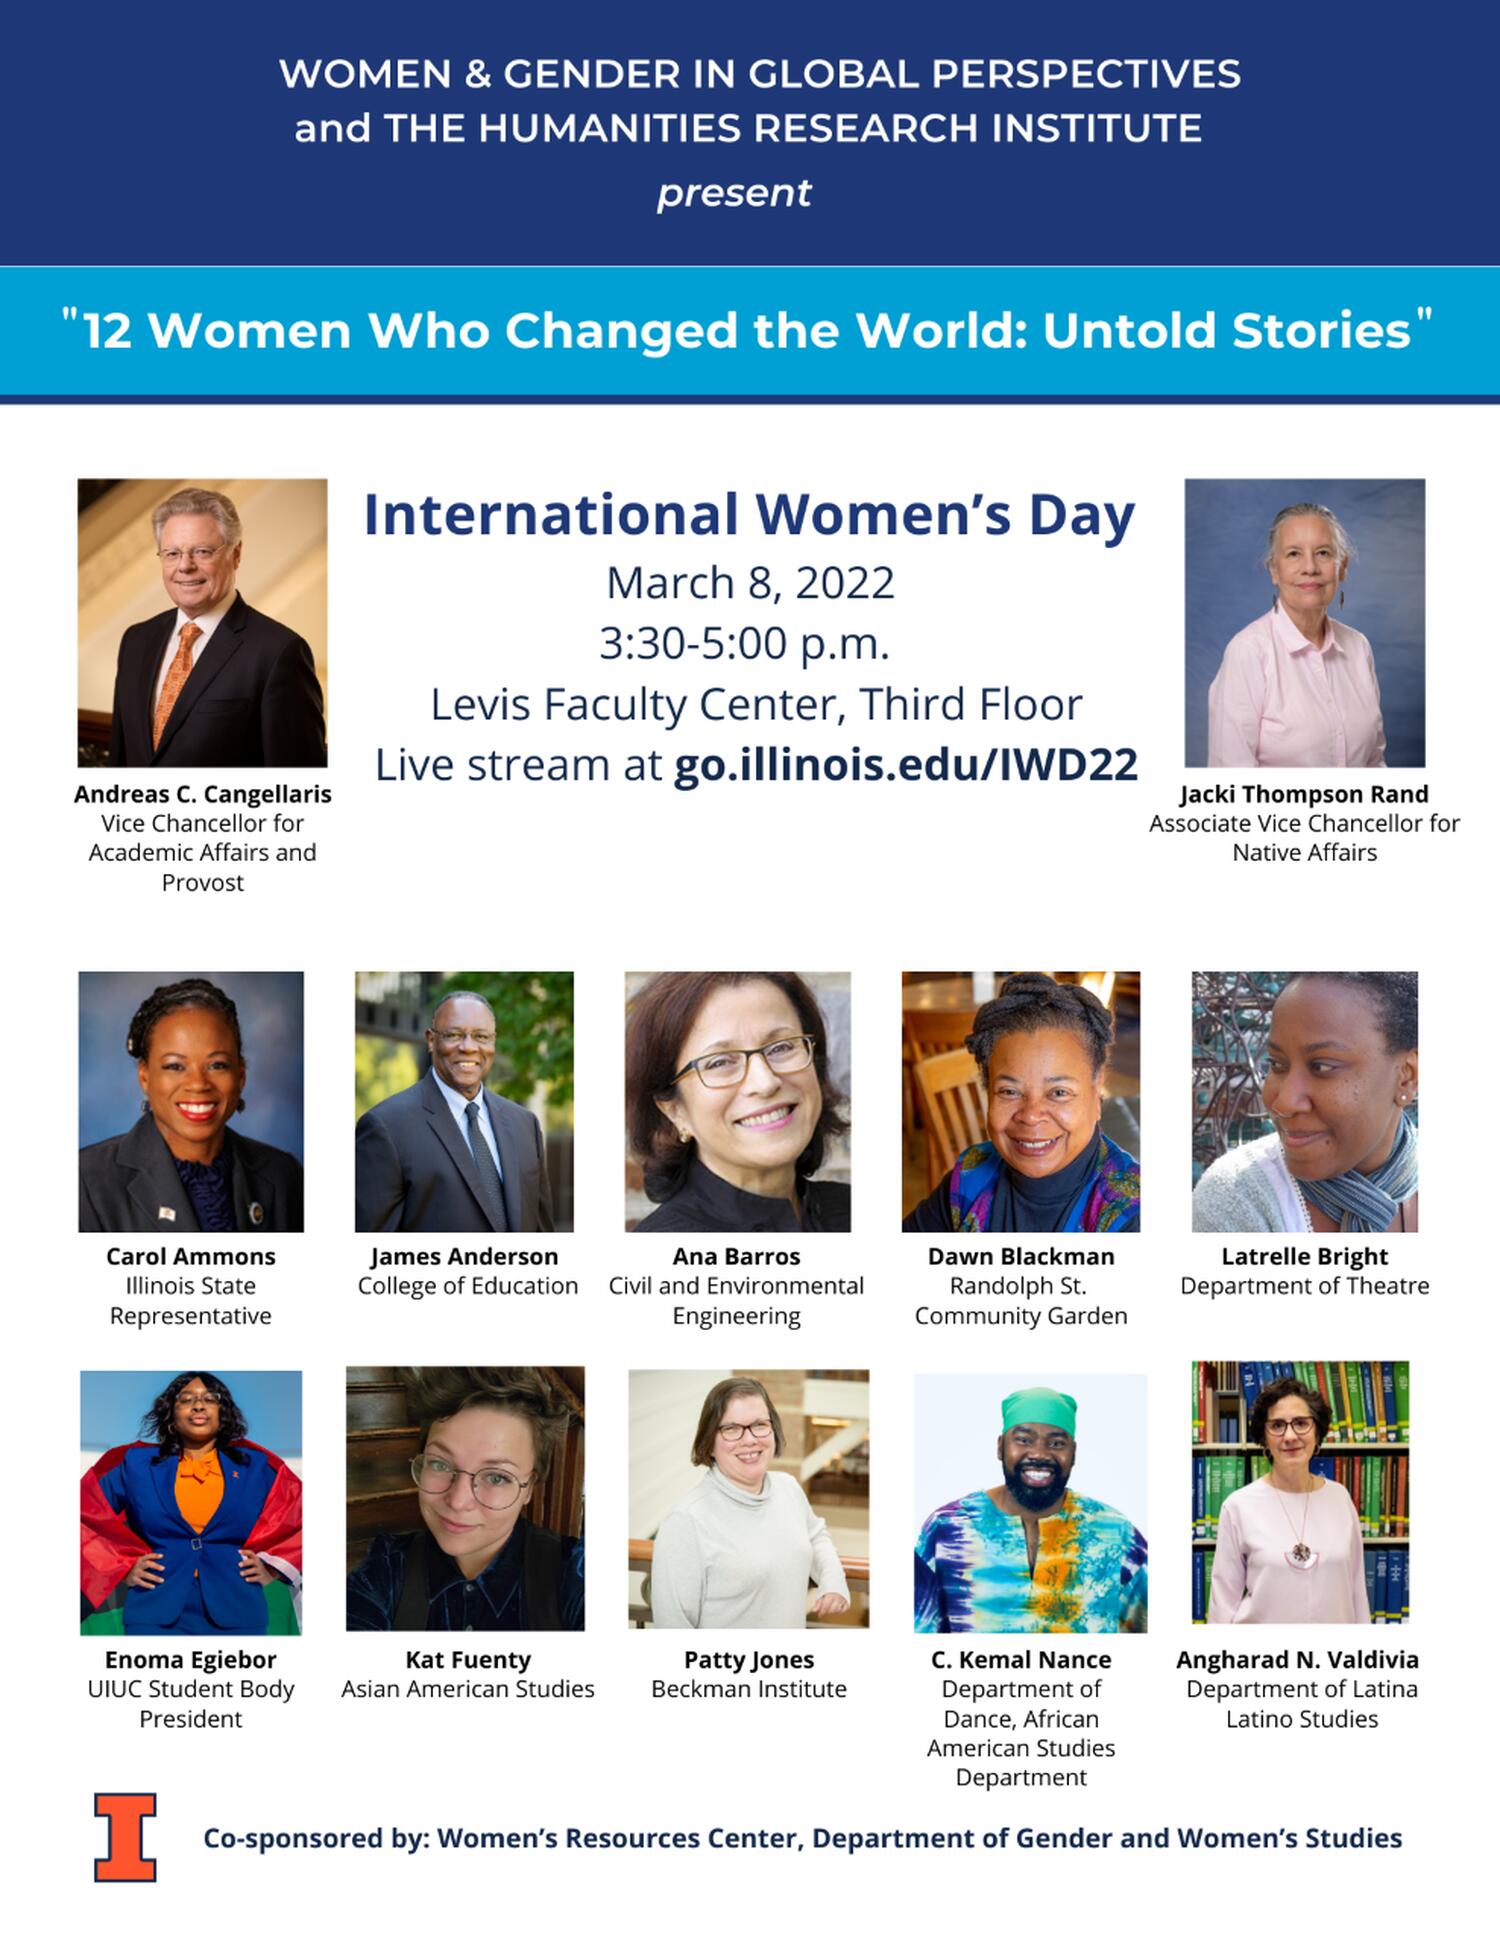 International Women's Day 2022 list + photos of speakers